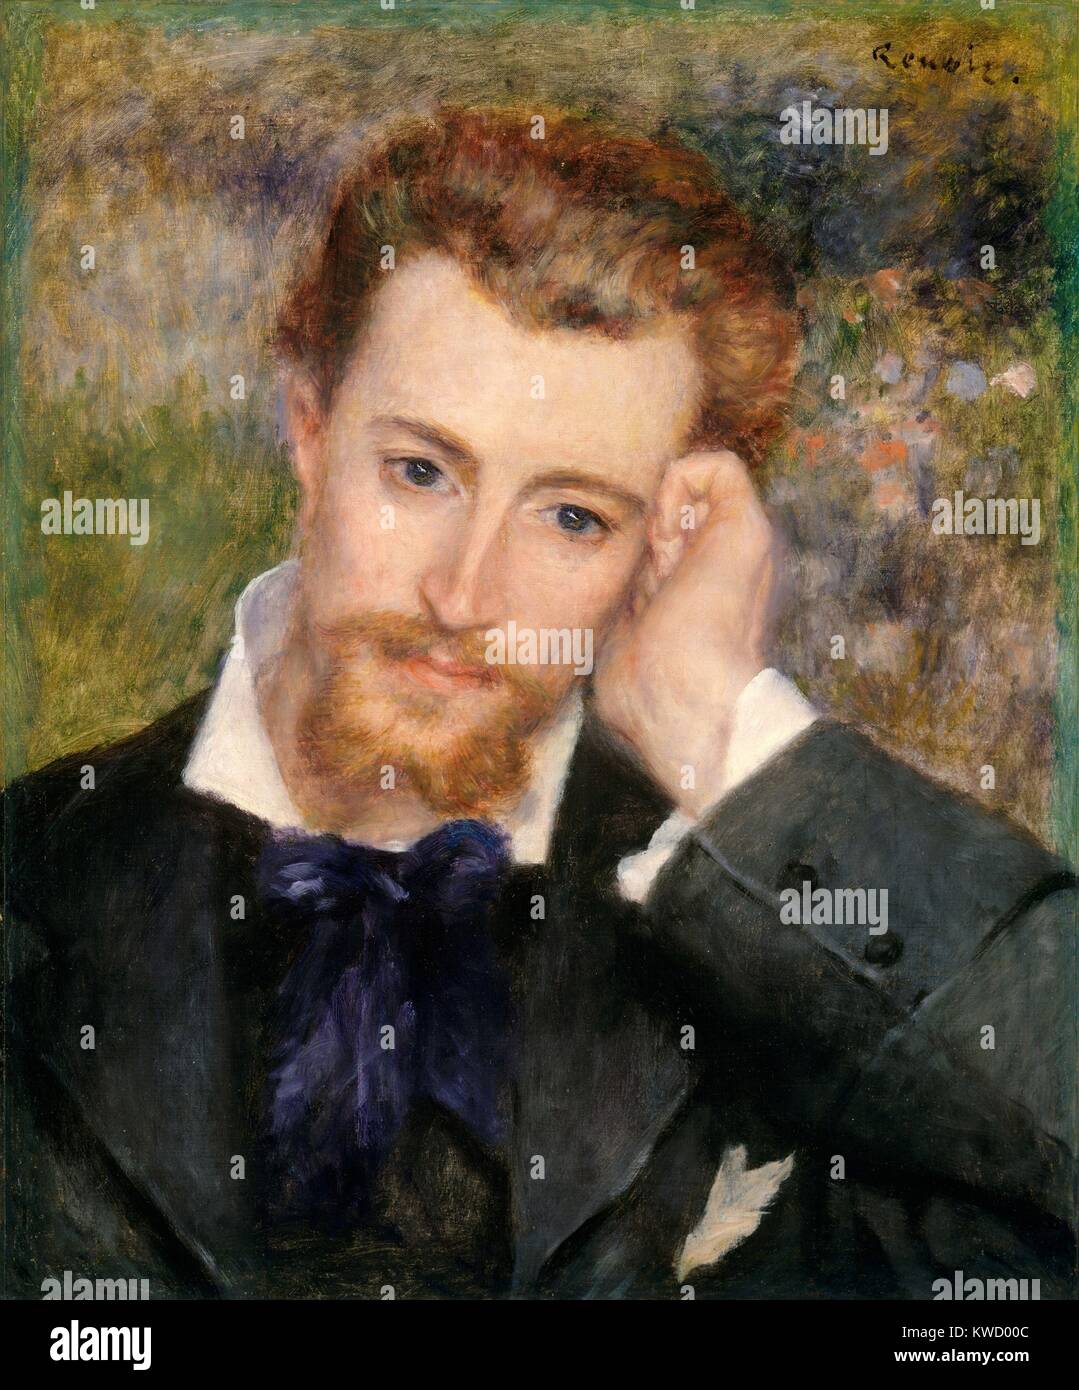 Eugene Murer, da Auguste Renoir, 1877, impressionista francese pittura, olio su tela. Murer fu un artista, pasticciere, romanziere, poeta e collezionista di dipinti impressionisti (BSLOC 2017 3 72) Foto Stock